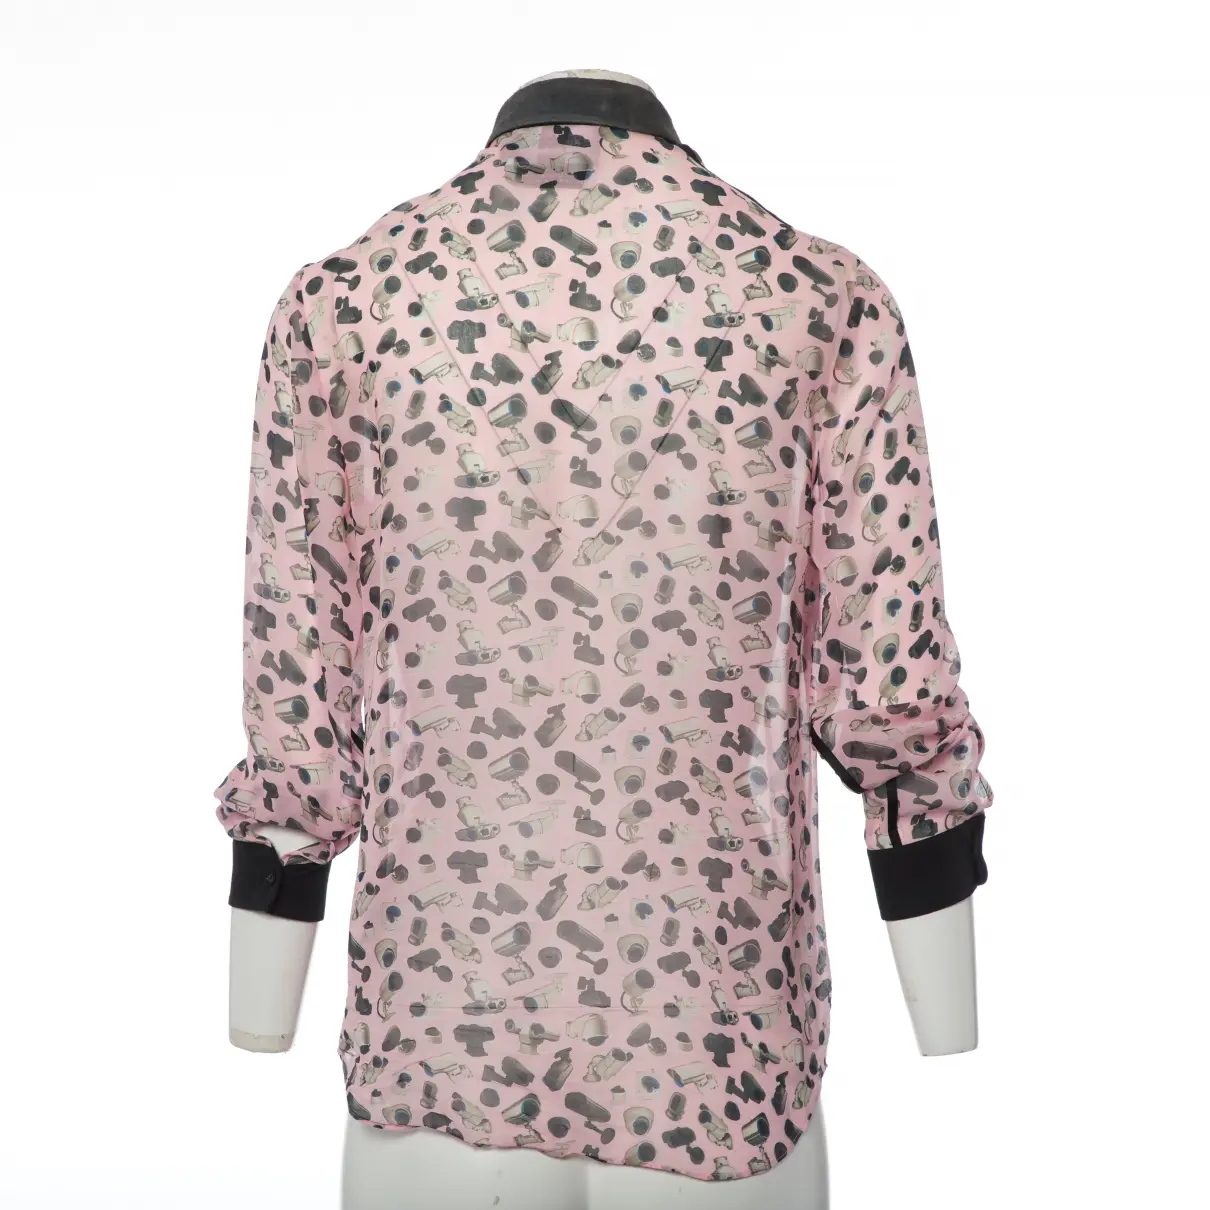 Buy Antipodium Silk shirt online